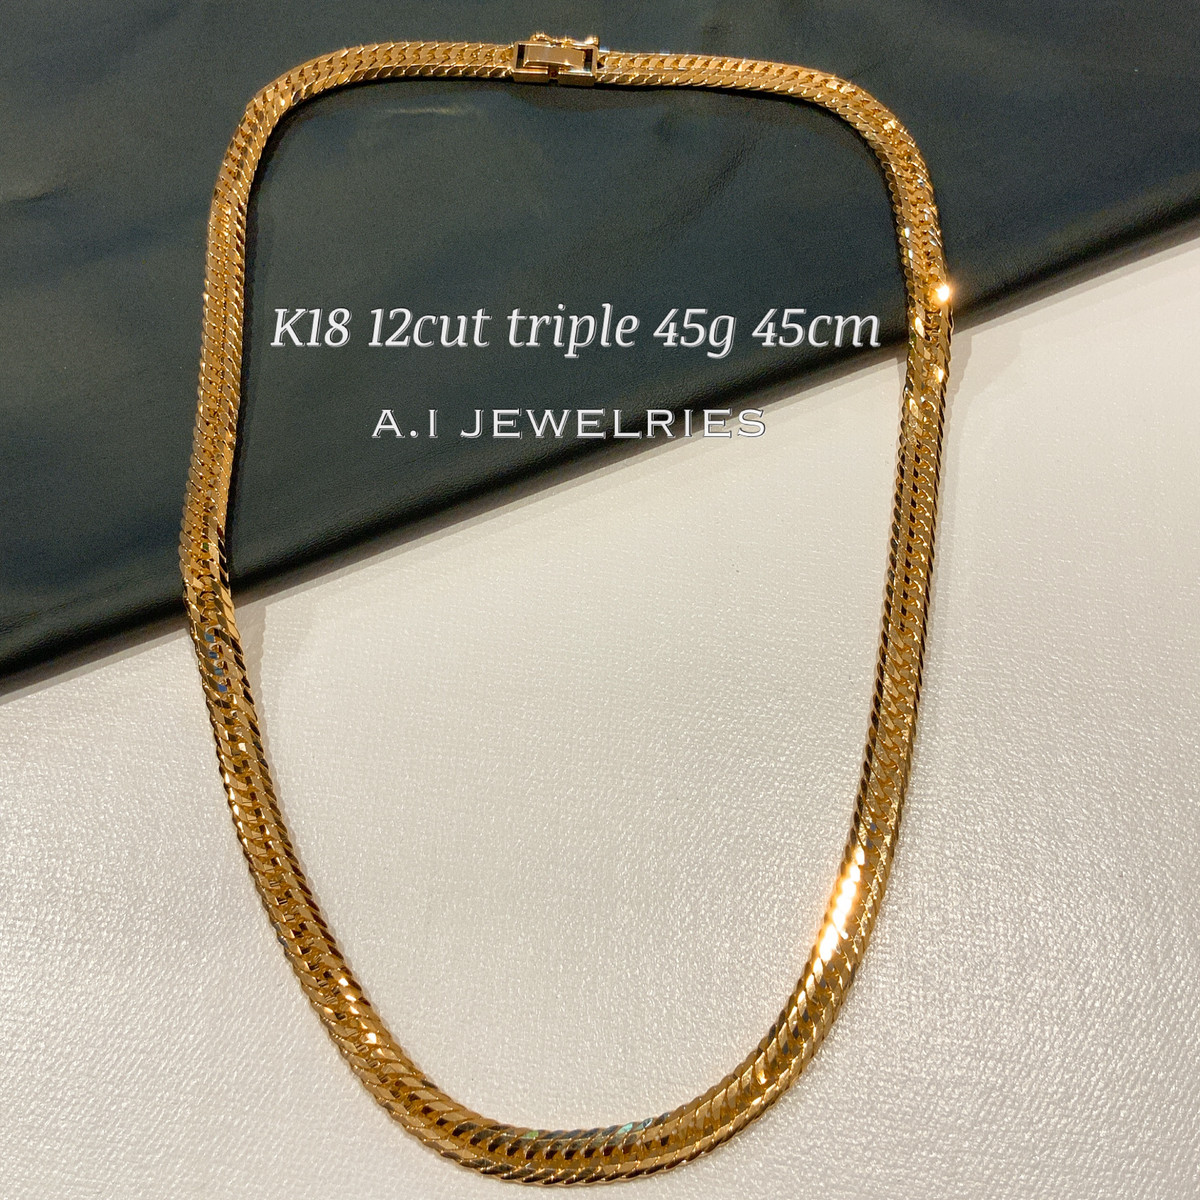 k18 12面カット トリプル 45g 45cm 喜平ネックレス 12cut triple kihei necklace | A.I